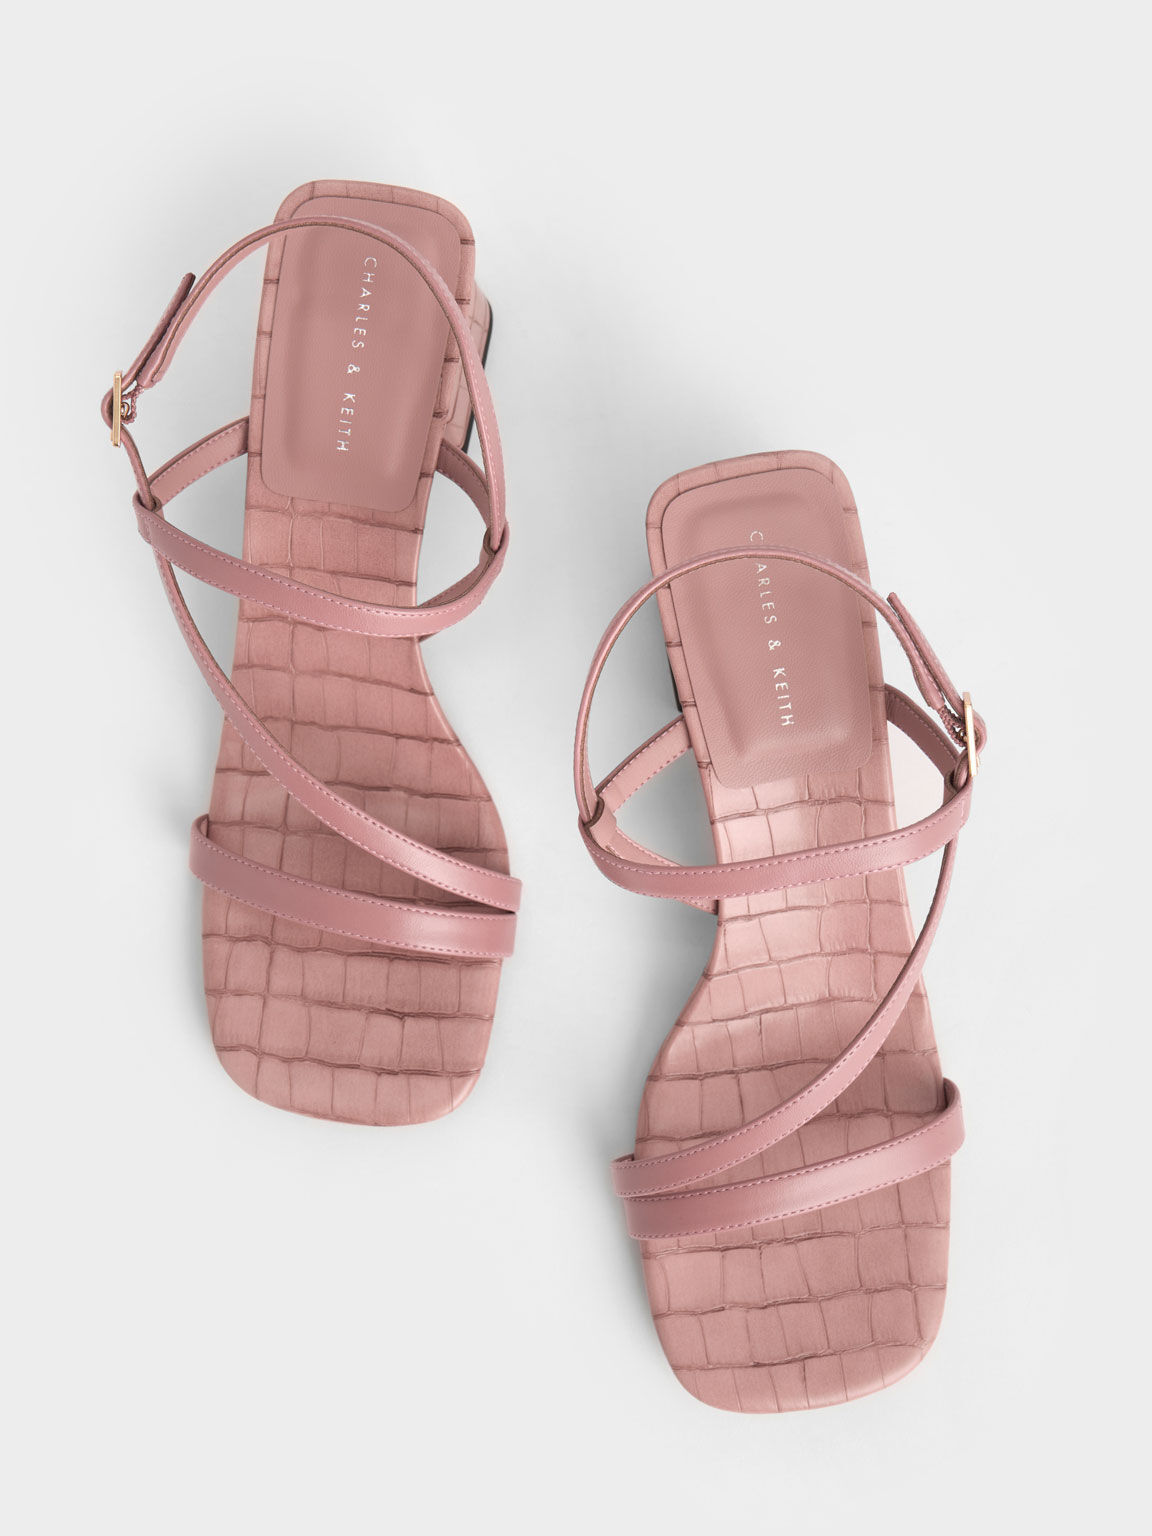 Croc-Effect Asymmetric Slingback Sandals, Pink, hi-res